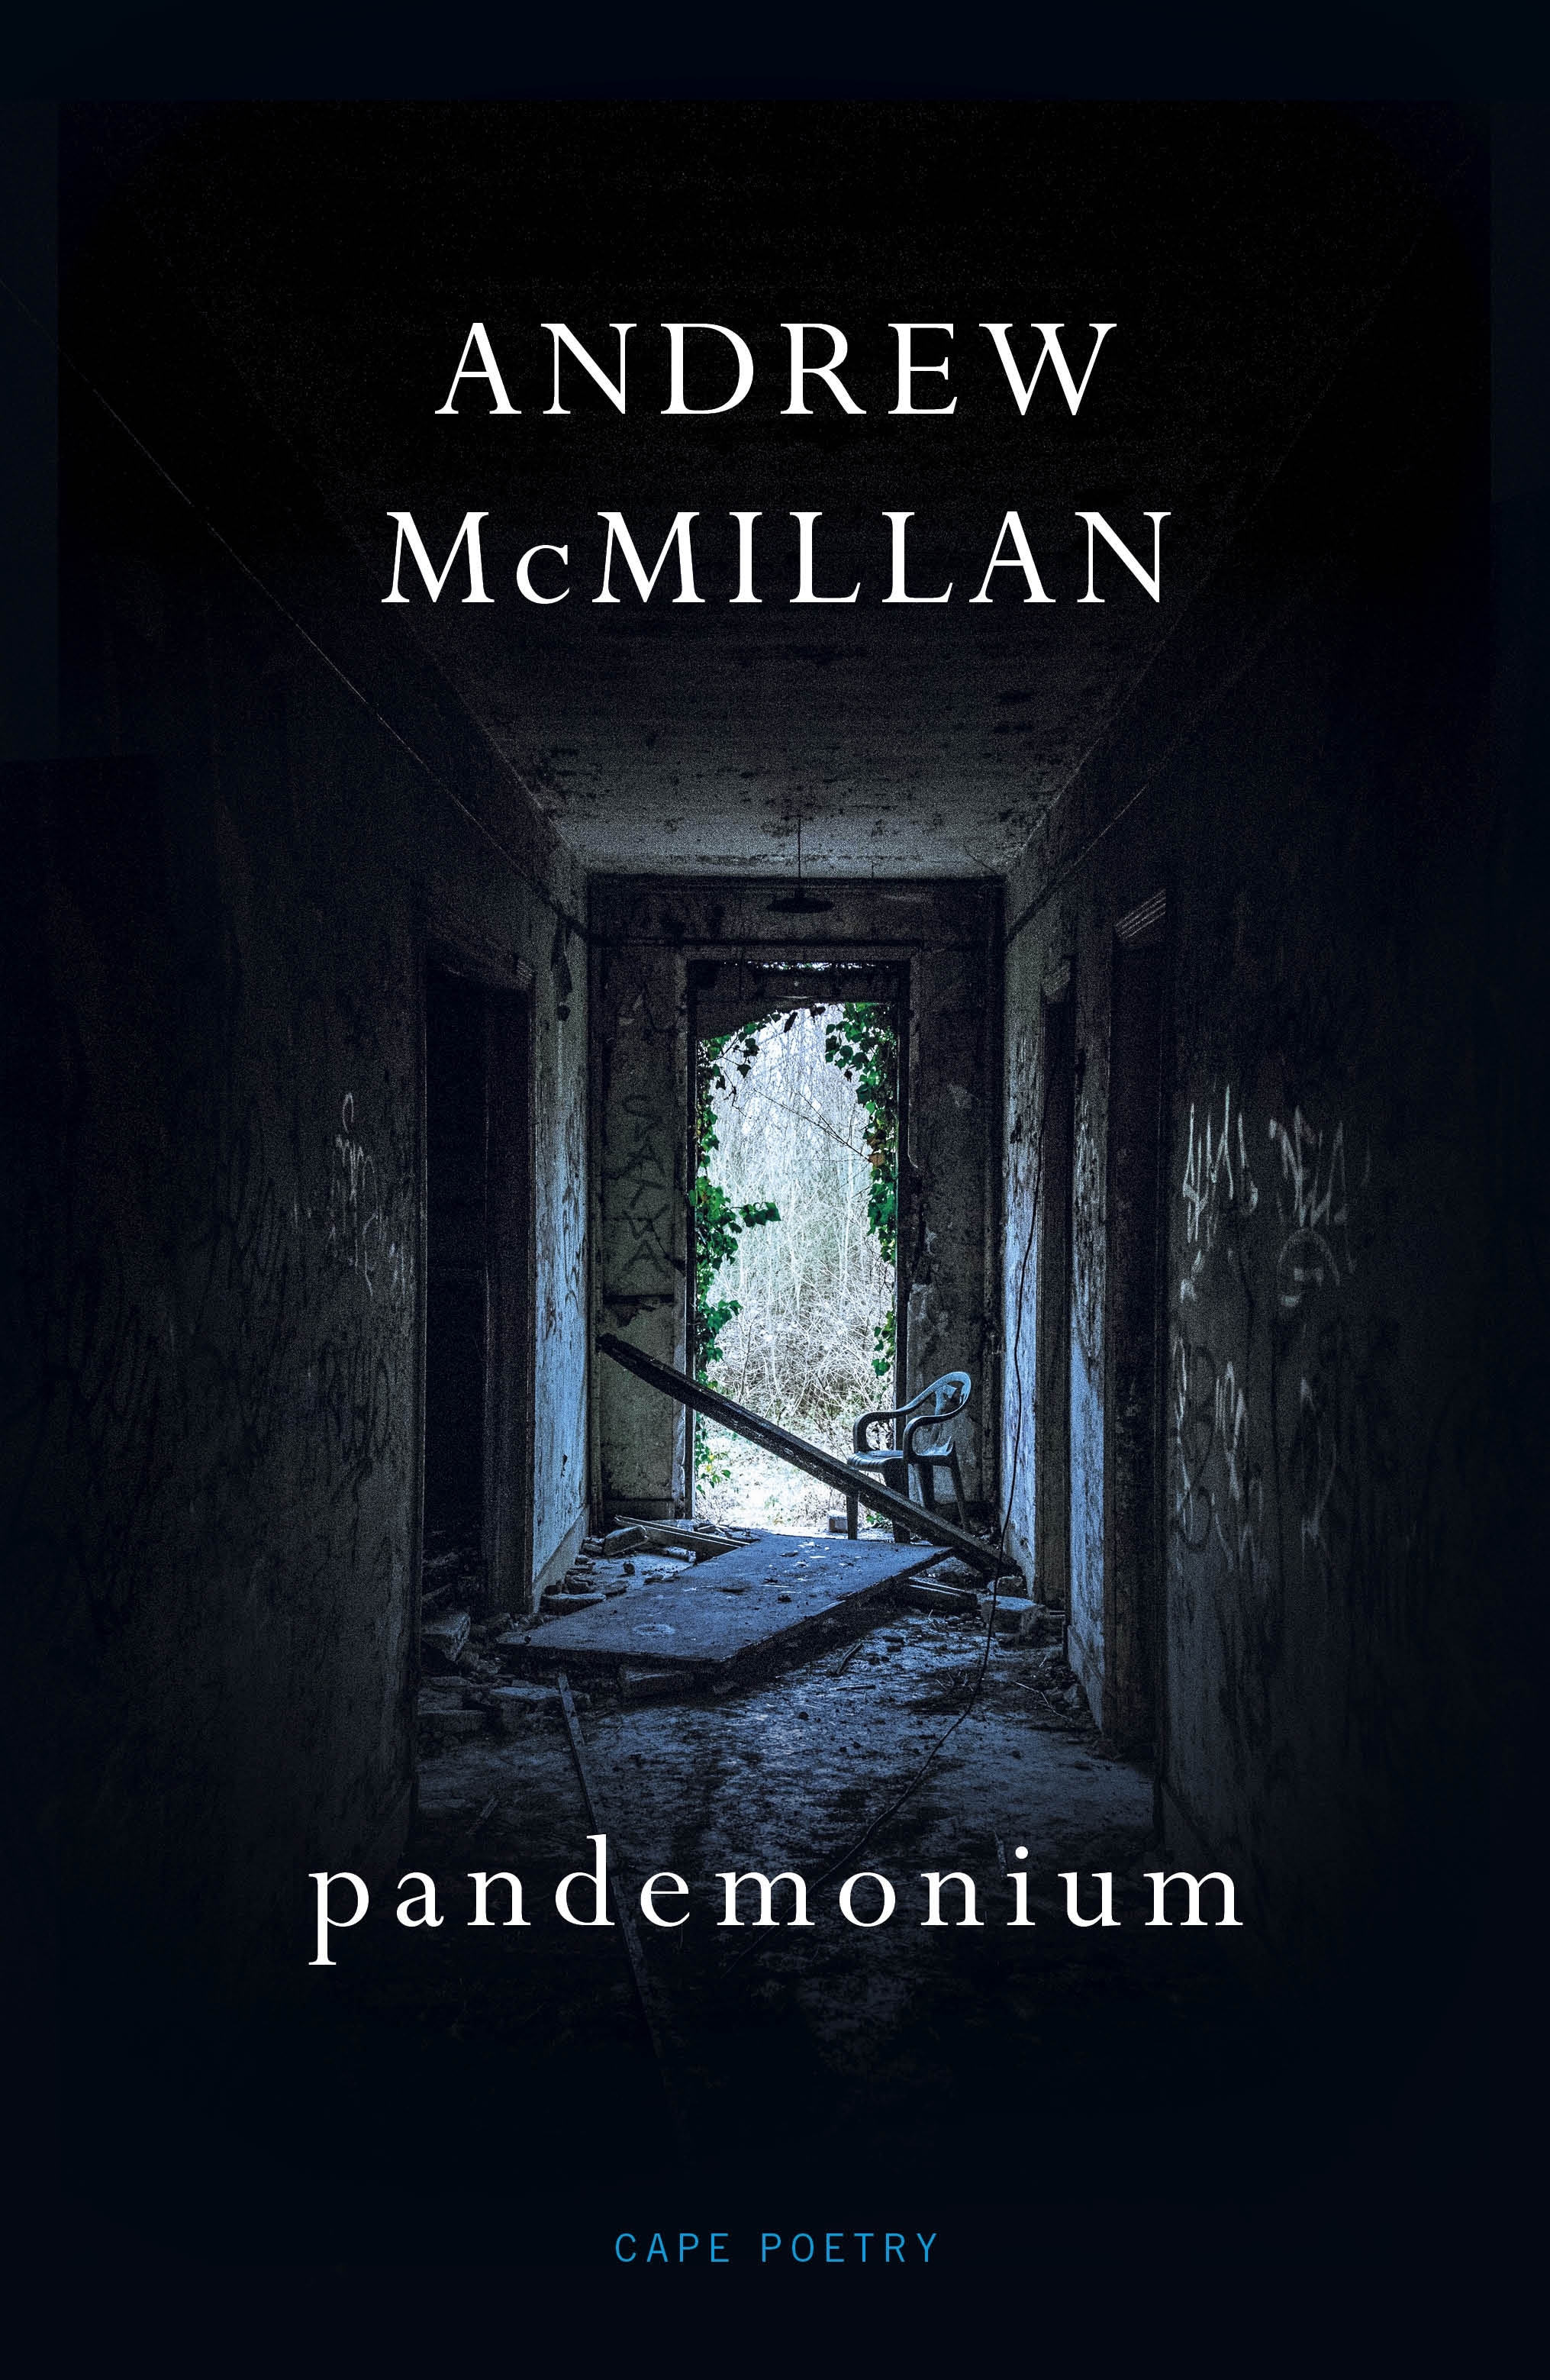 Book “pandemonium” by Andrew McMillan — May 20, 2021